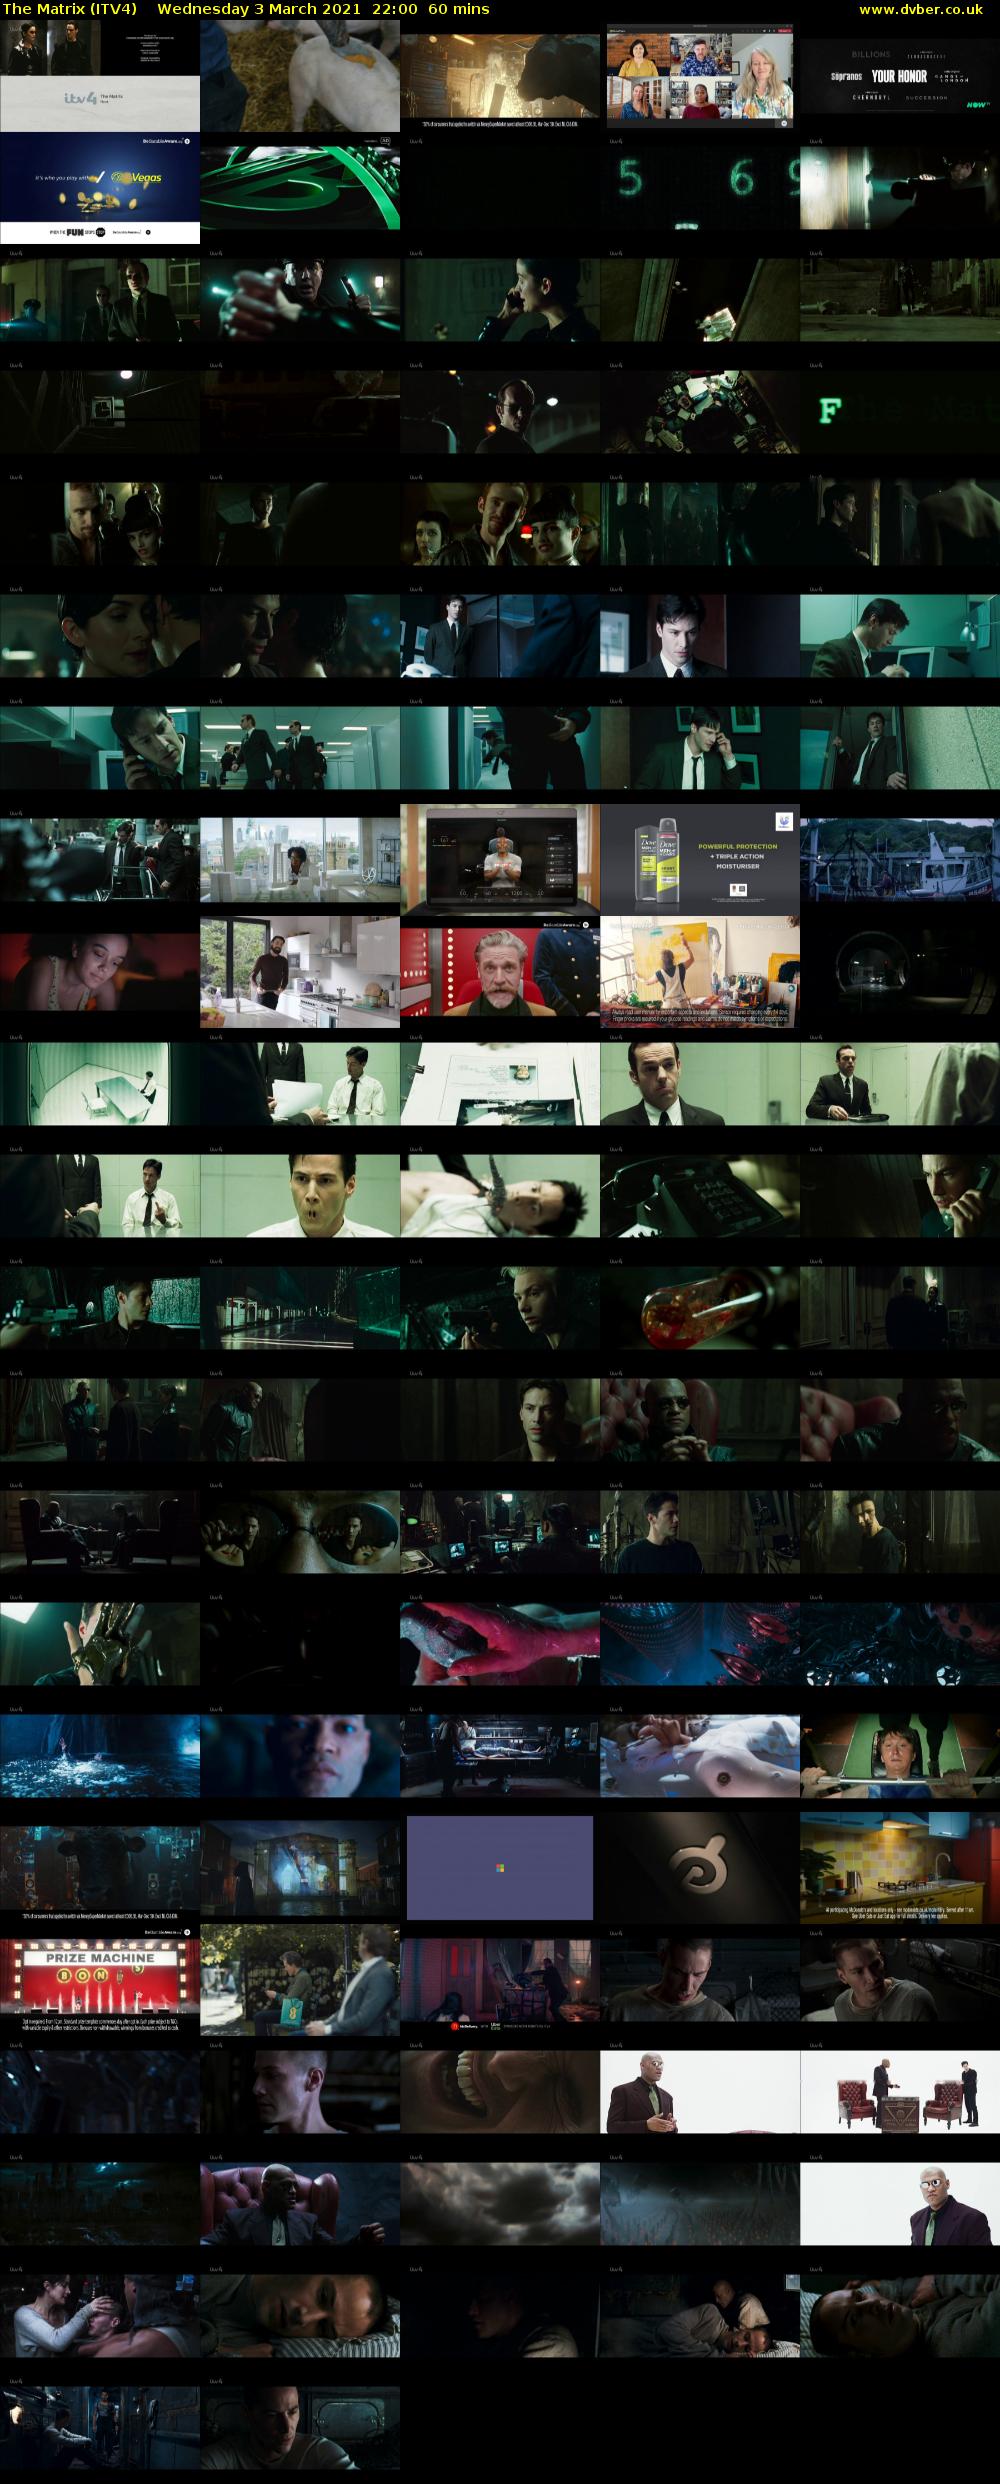 The Matrix (ITV4) Wednesday 3 March 2021 22:00 - 23:00